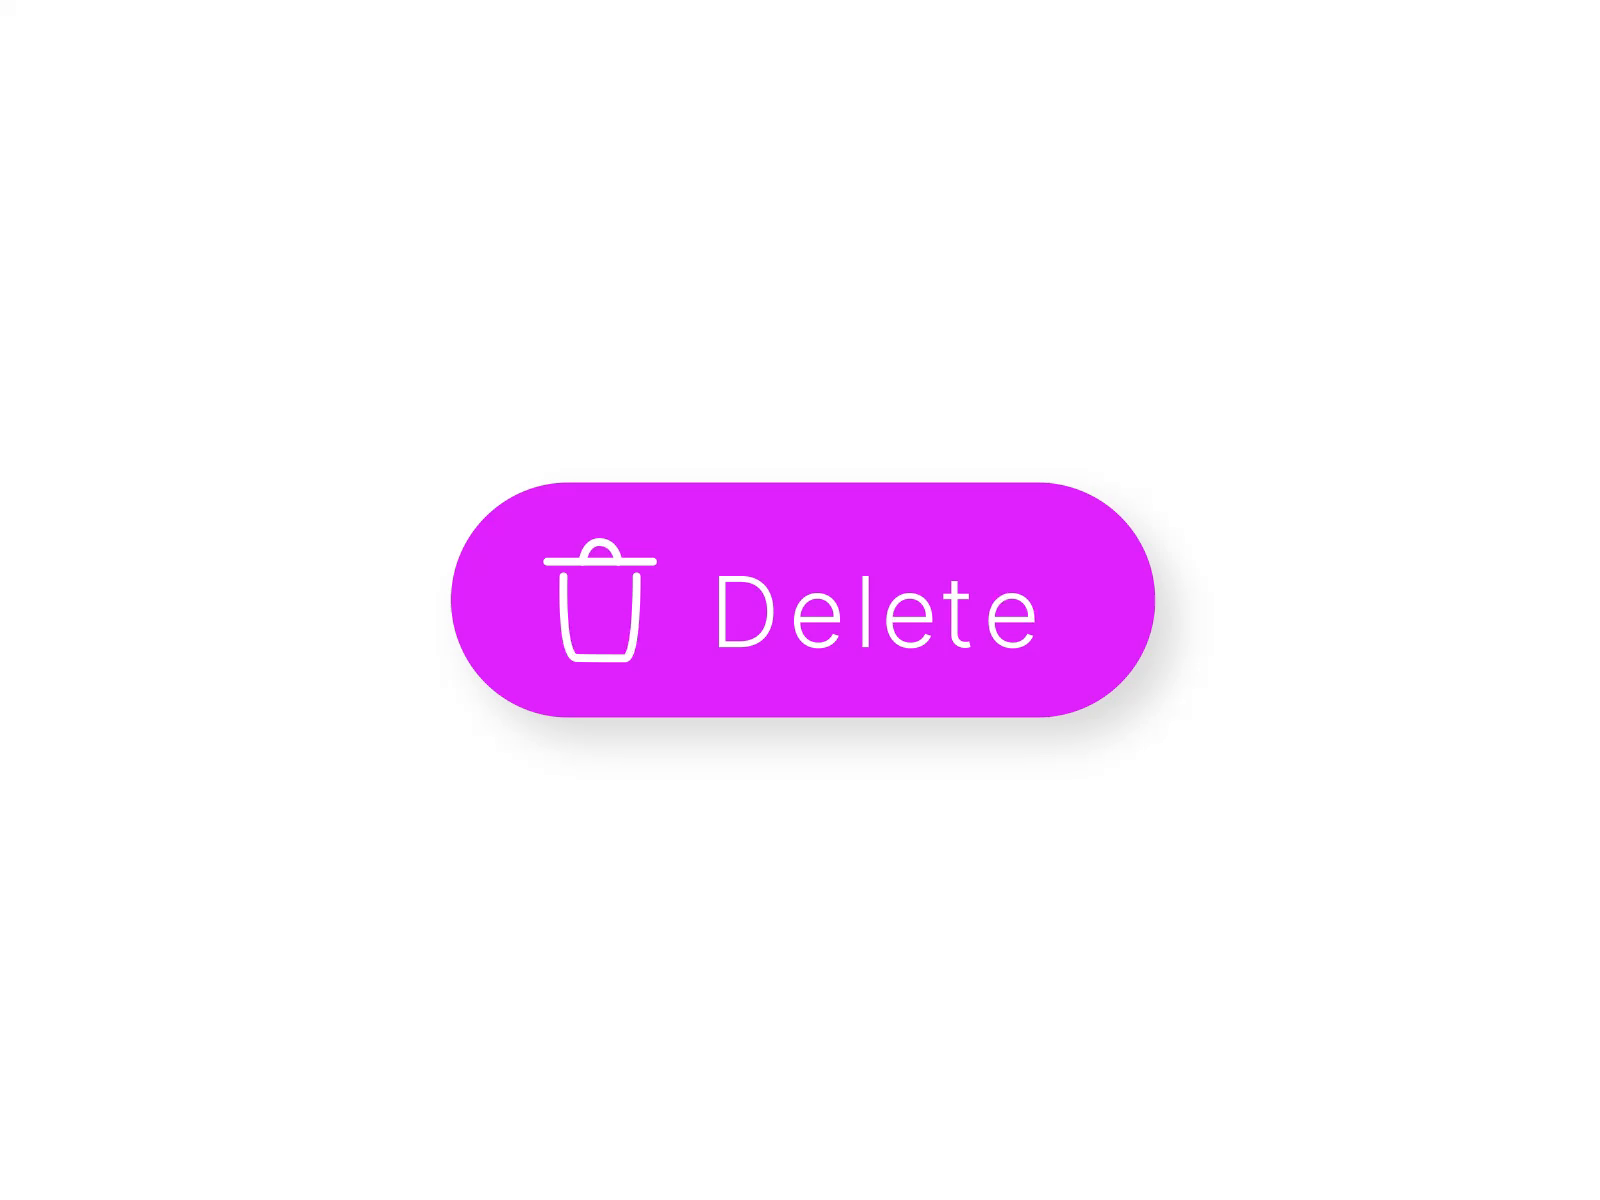 delete button image png